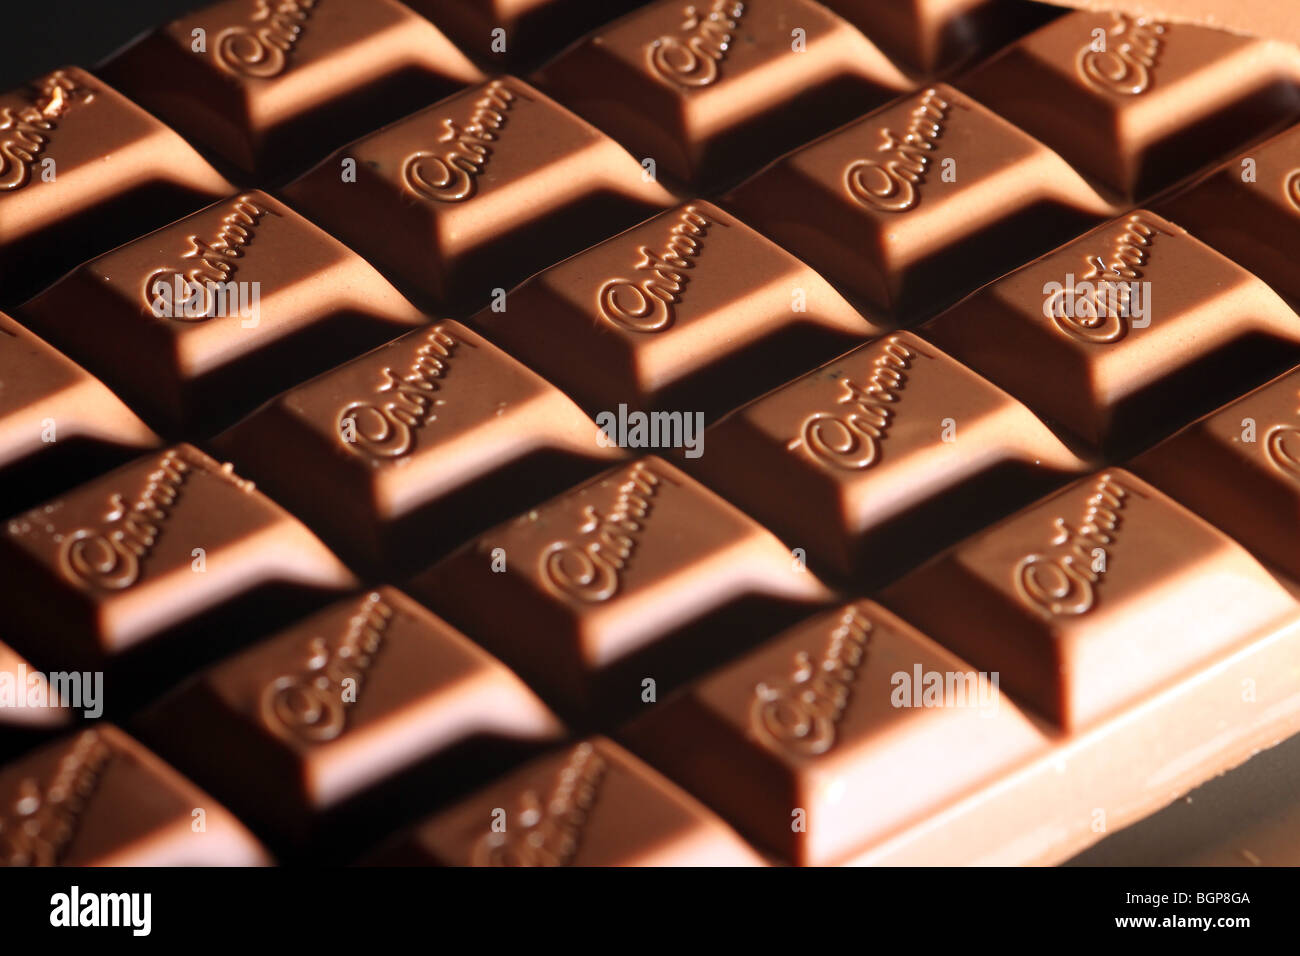 A bar of Cadbury Dairy Milk chocolate. Stock Photo